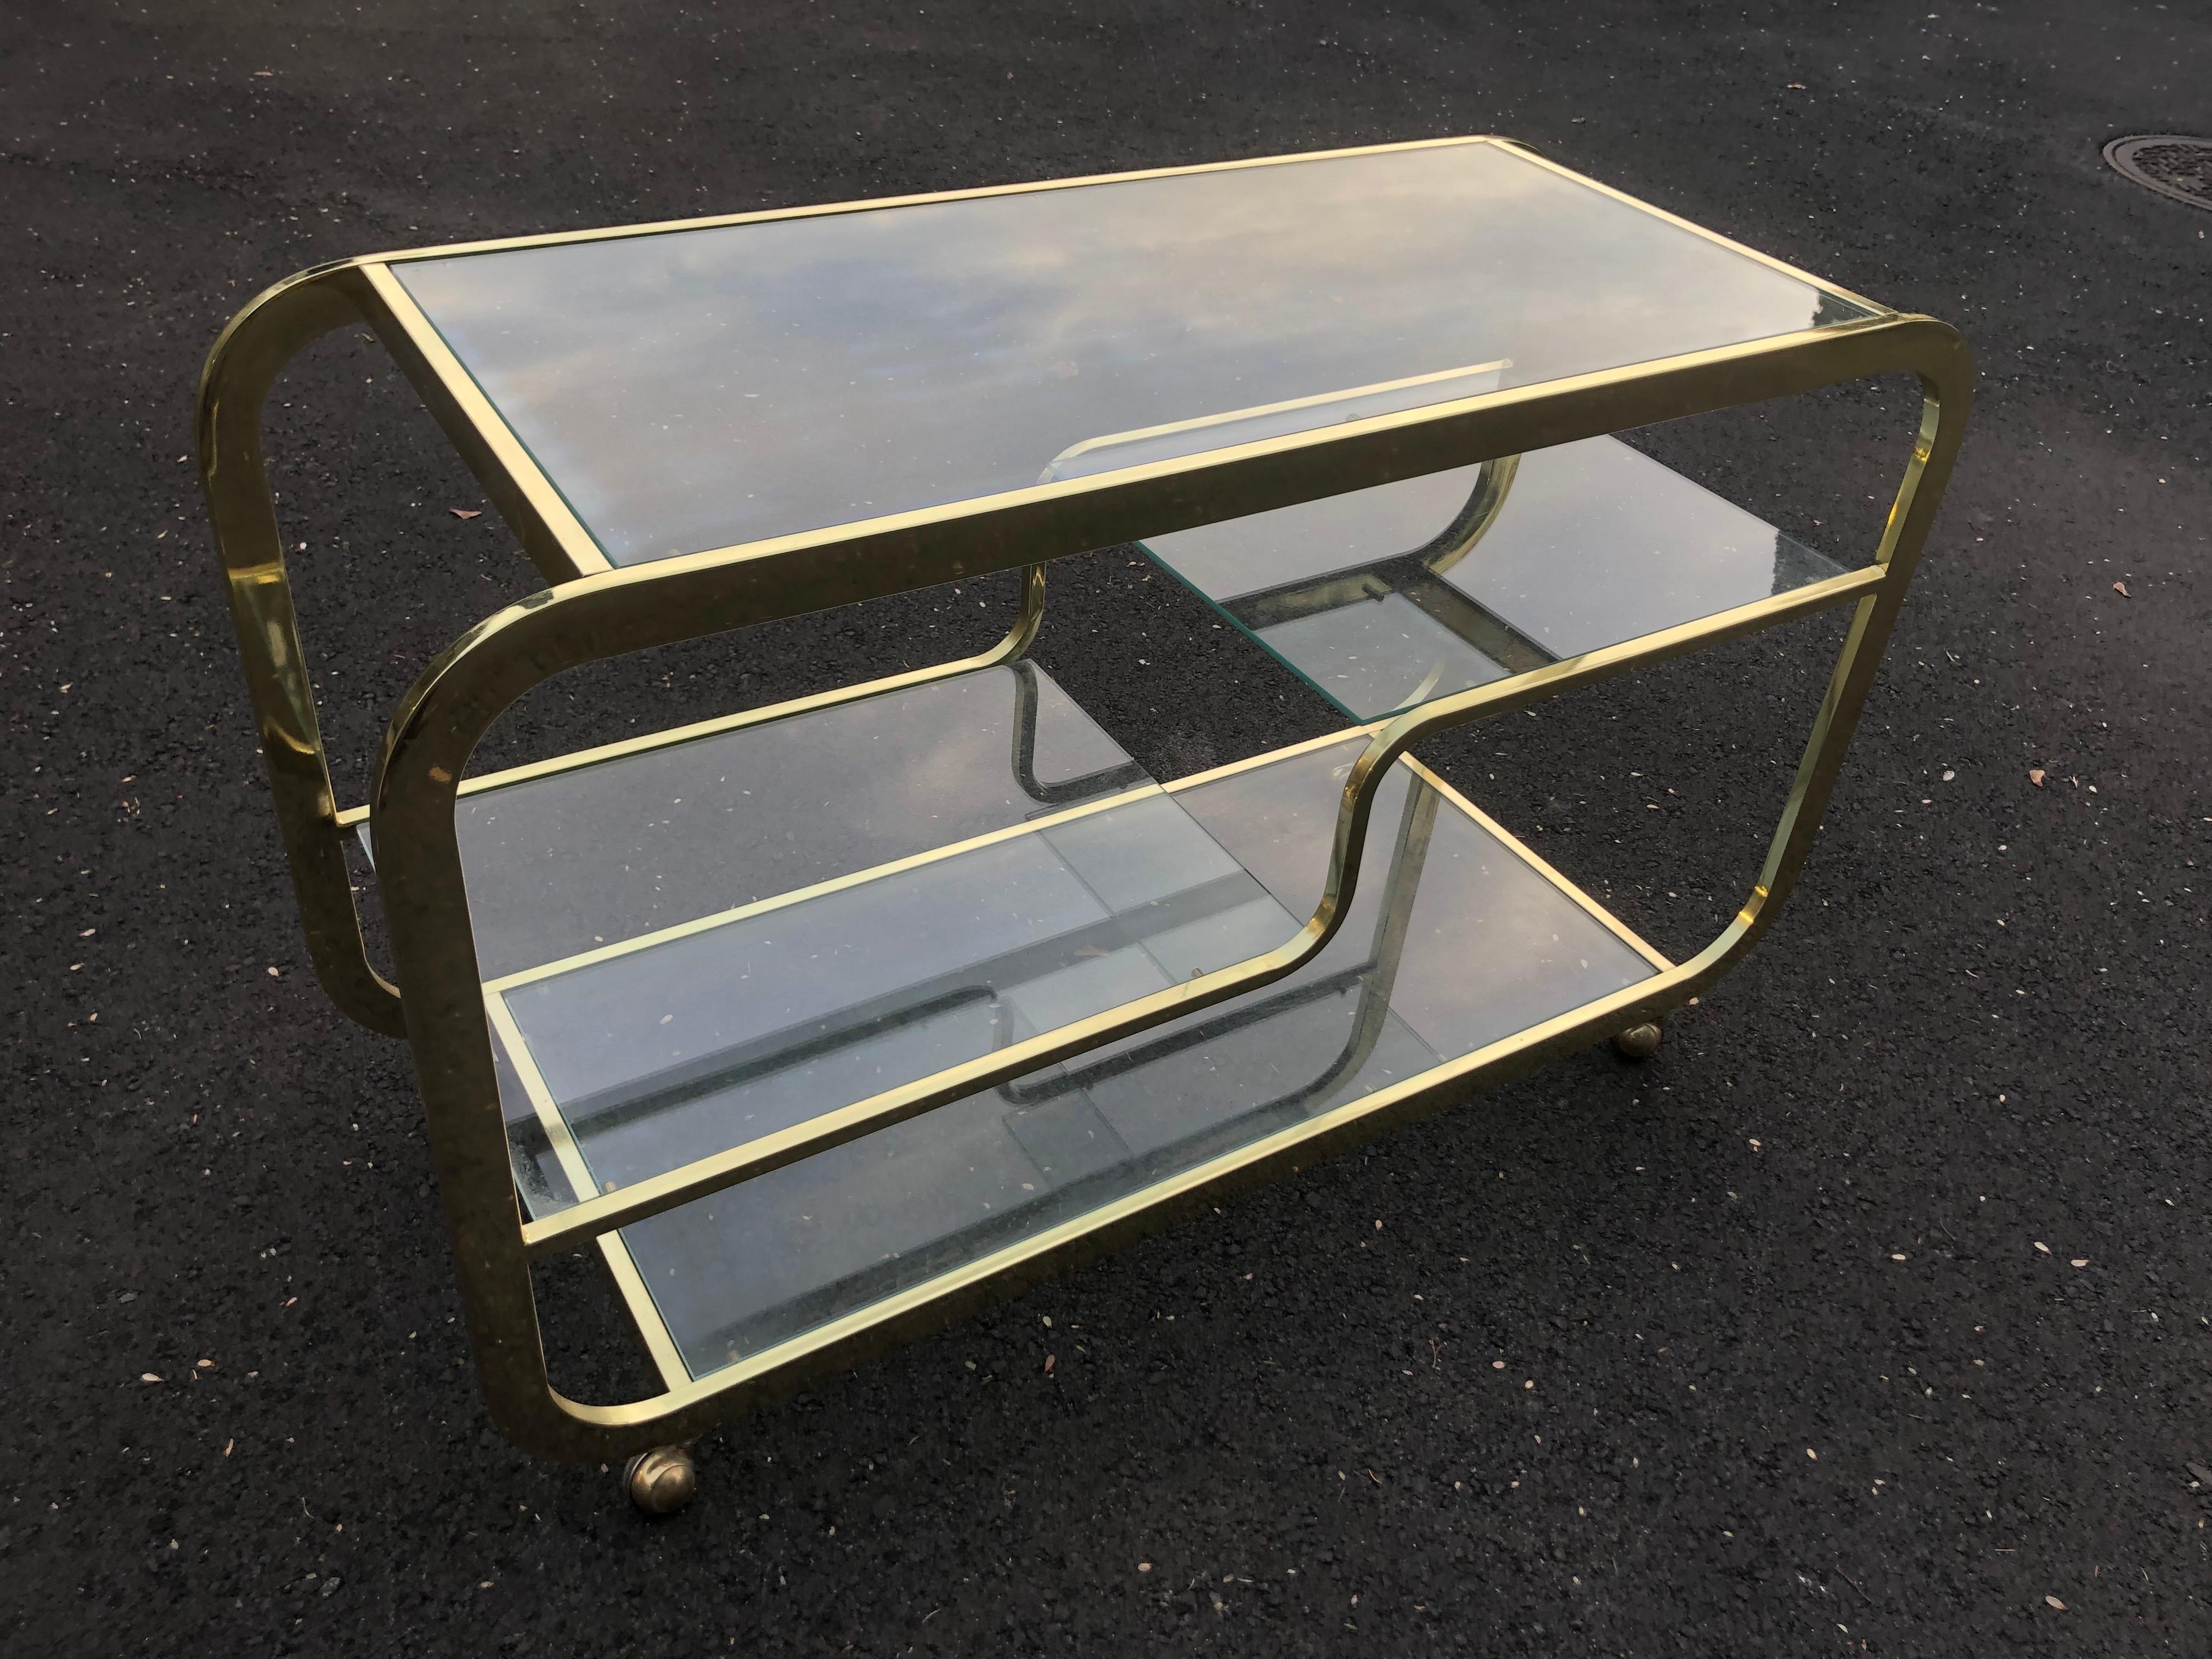 Late 17th Century Design Institute America (DIA) Brass and Glass Bar Cart